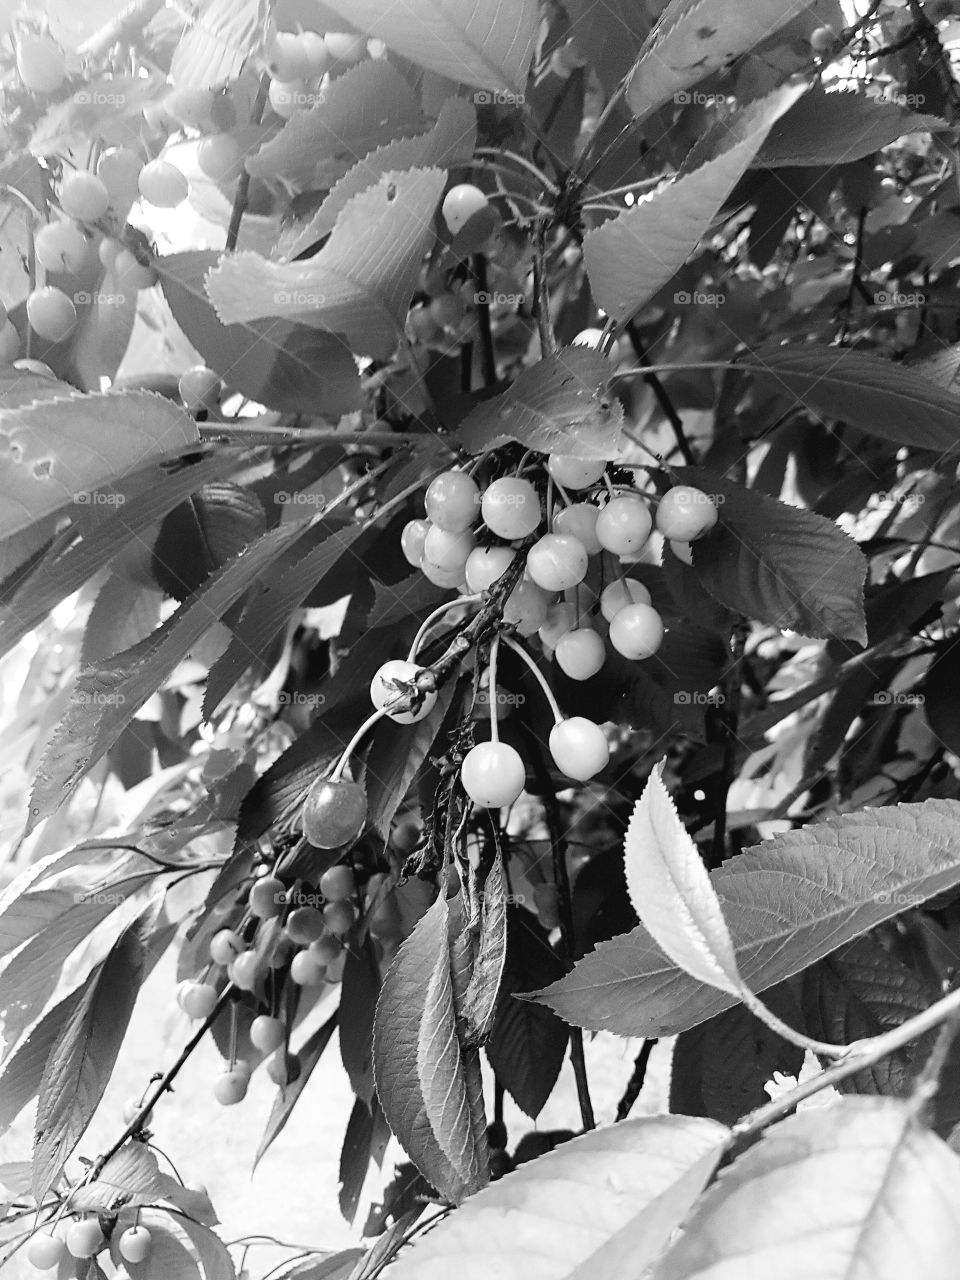 black & white berries